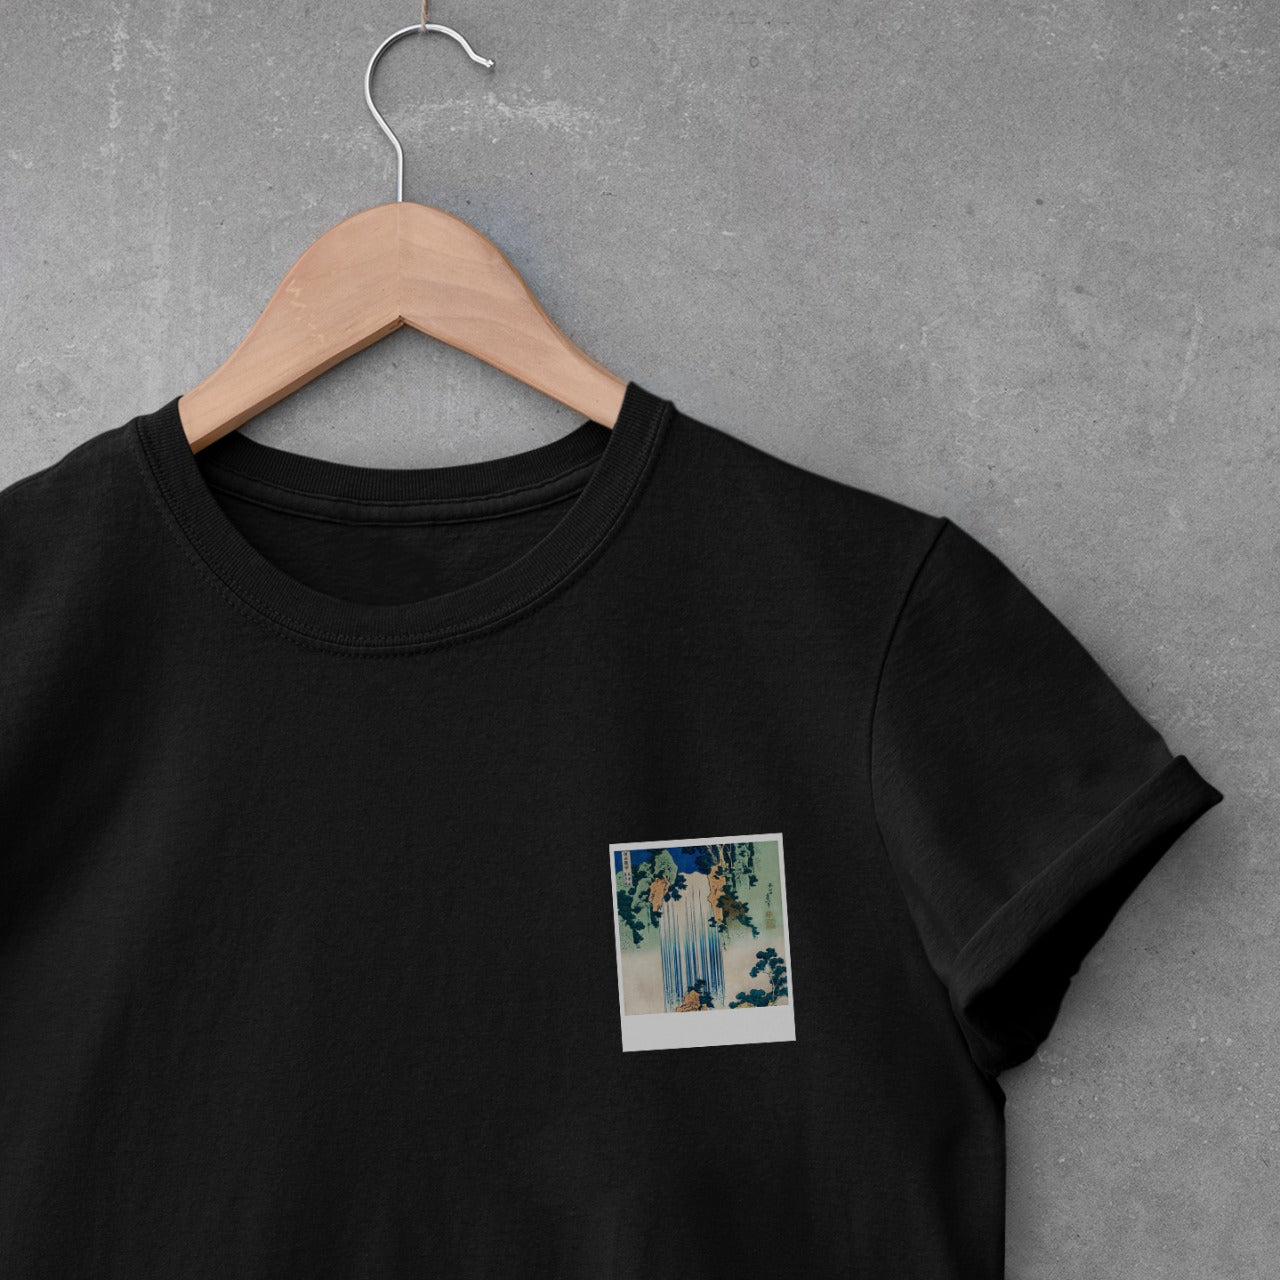 Japanese waterfall and foliage polaroid on black hanging t-shirt.